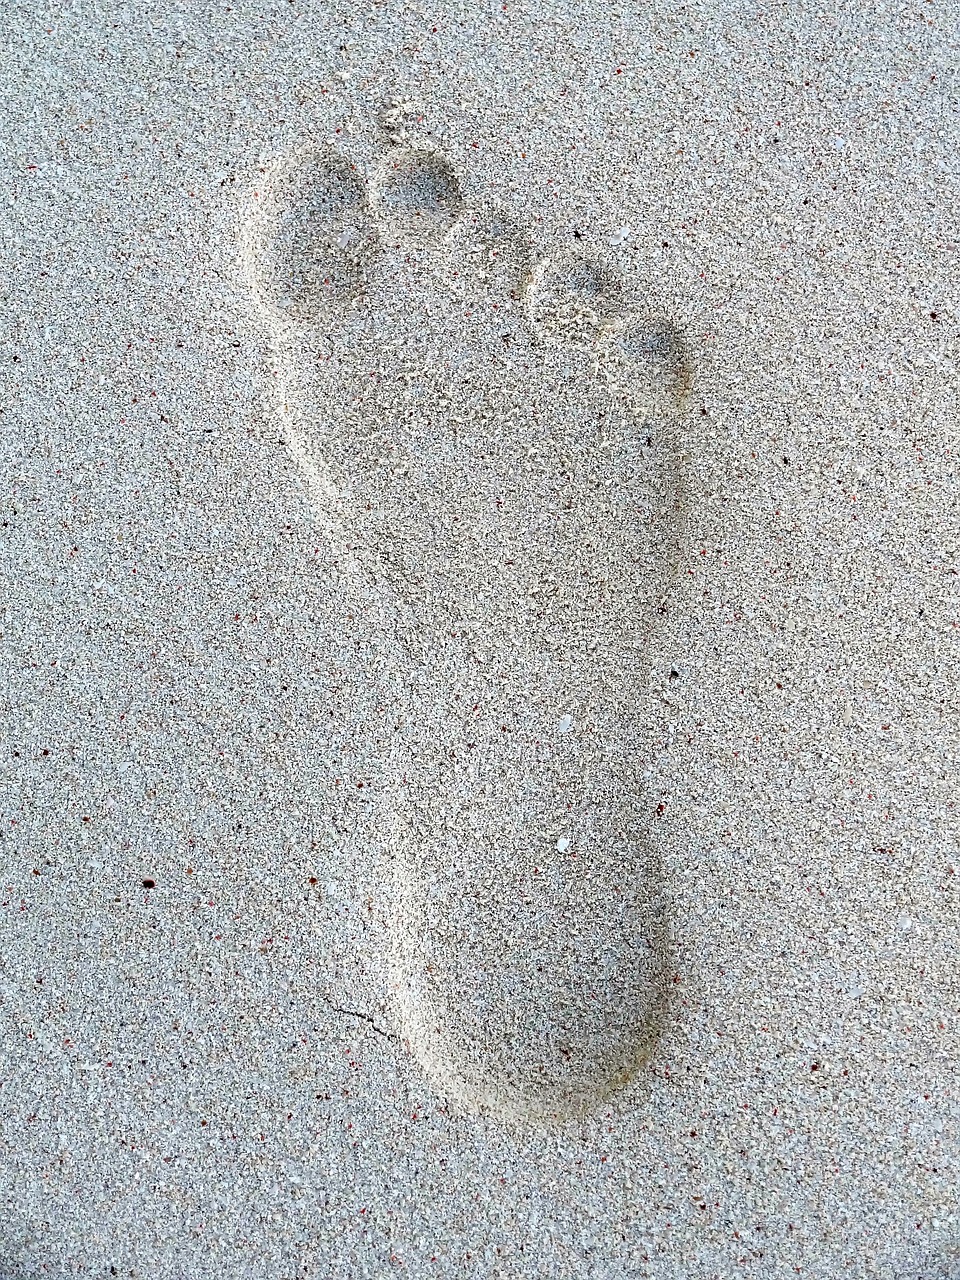 footprint sand beach foot free photo